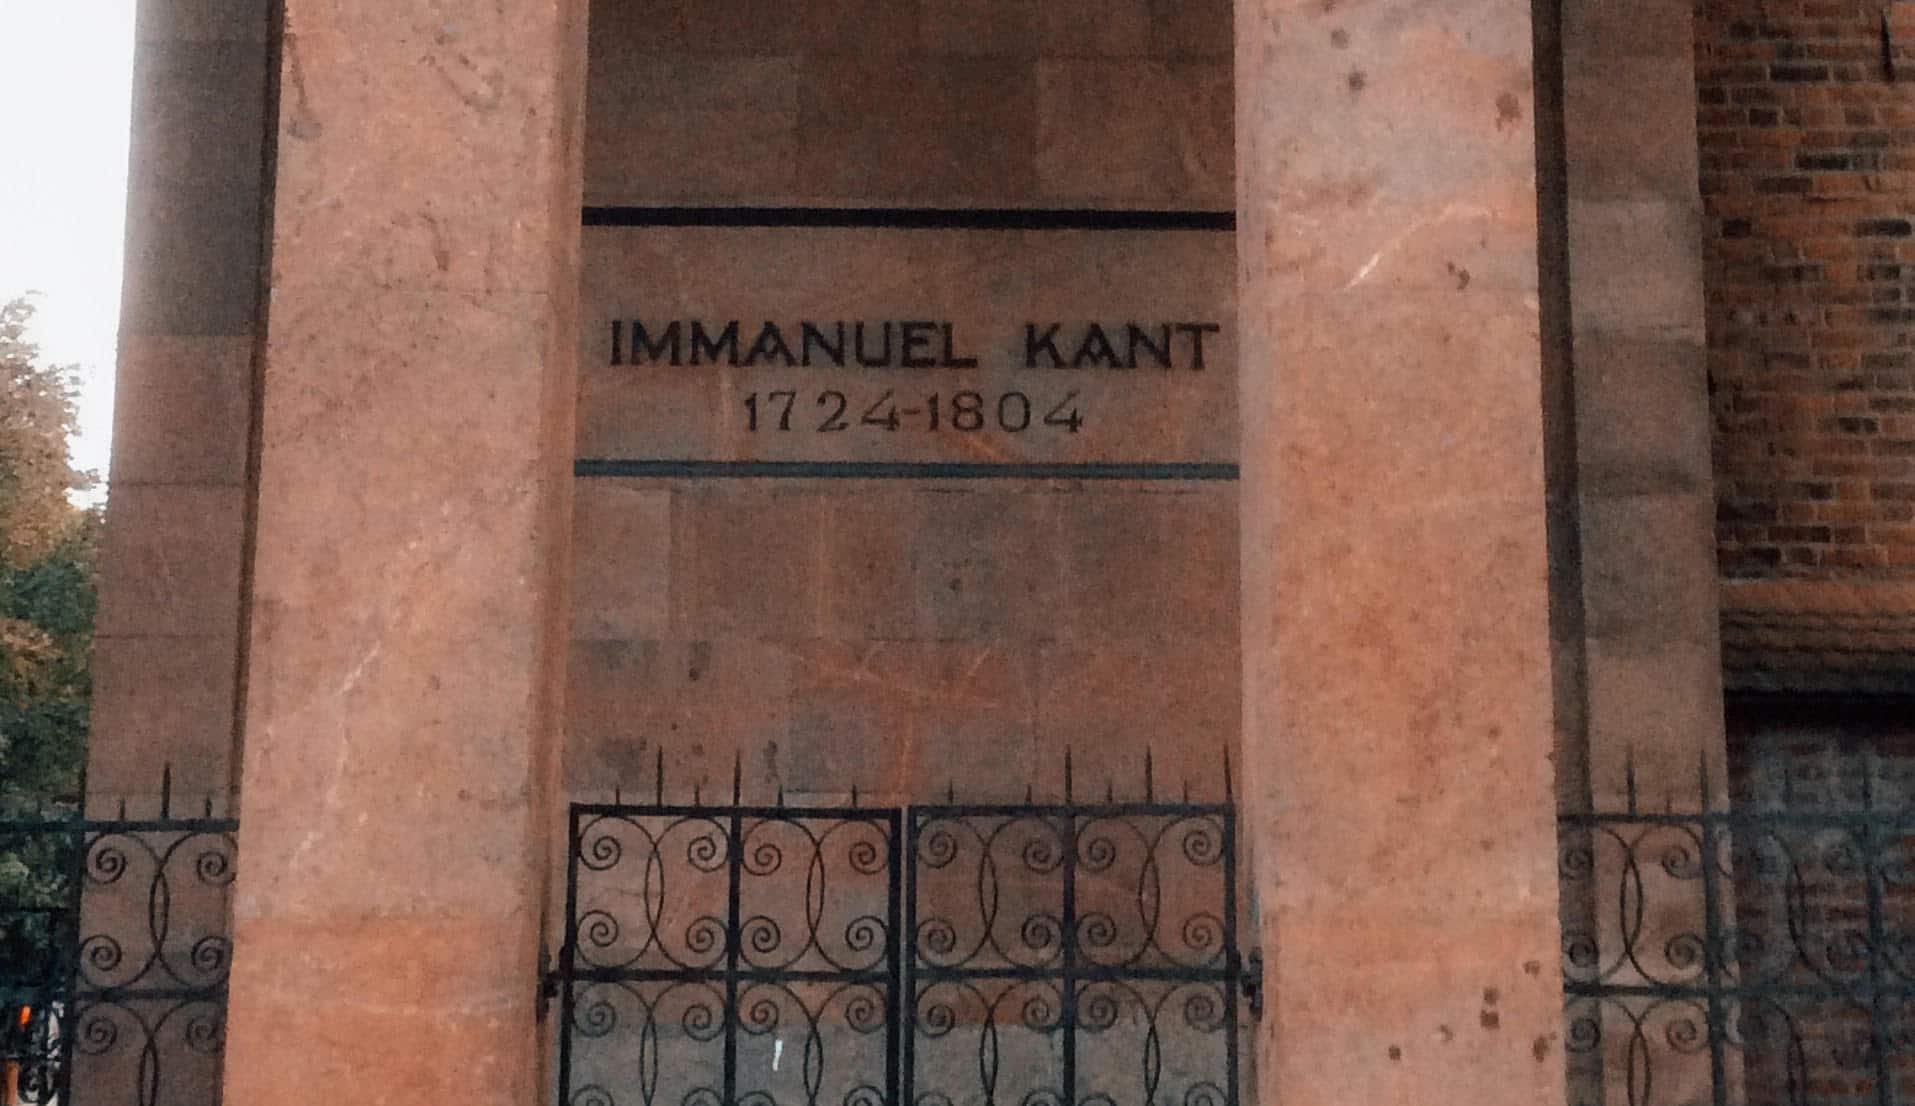 Memorial to Immanuel Kant in Kaliningrad, Russia